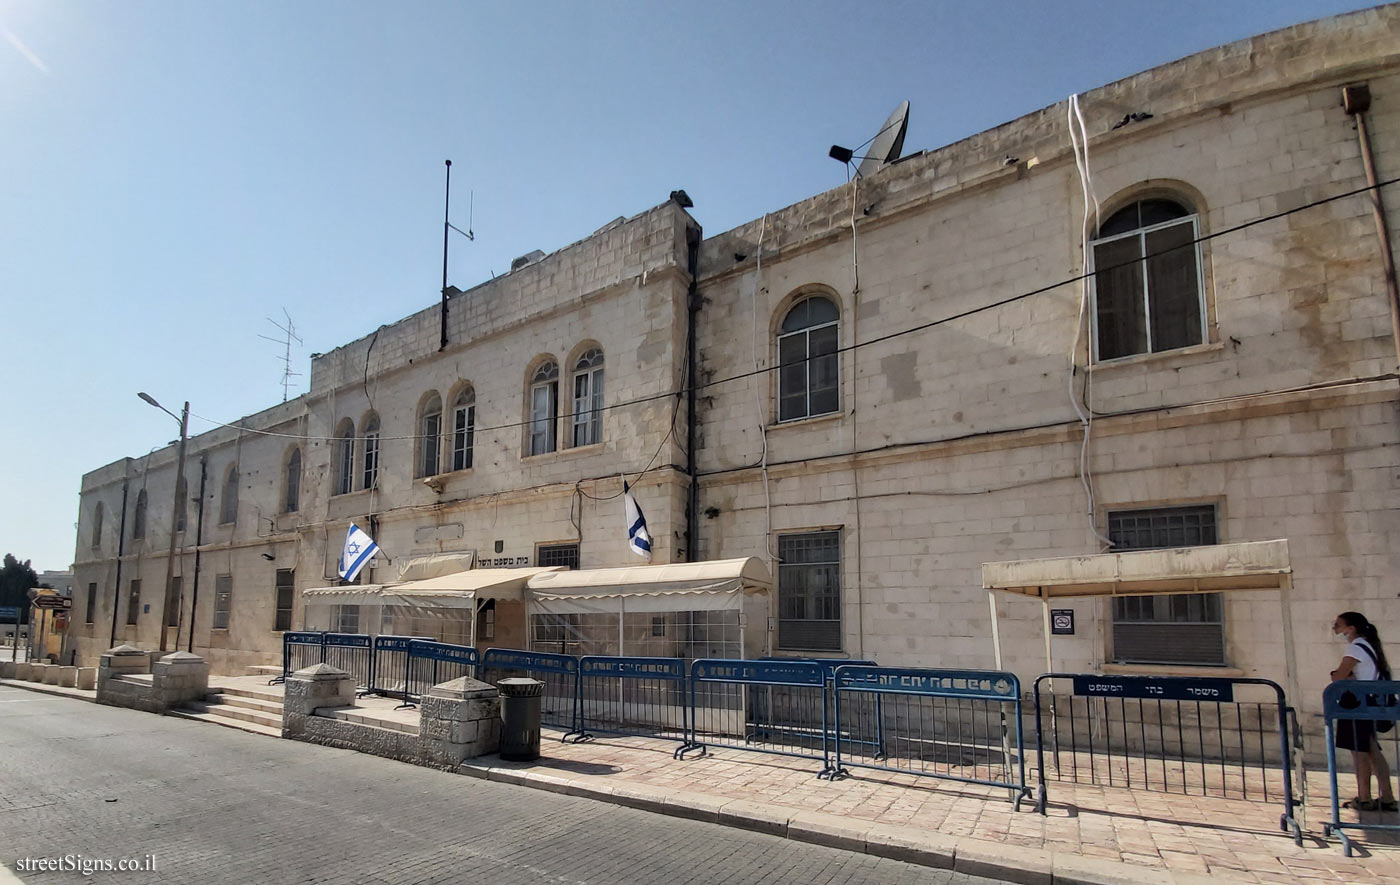 Jerusalem - The Built Heritage - "Duhovnia" Russian Mission Building  - Shne’ur Kheshin St 24, Jerusalem, Israel